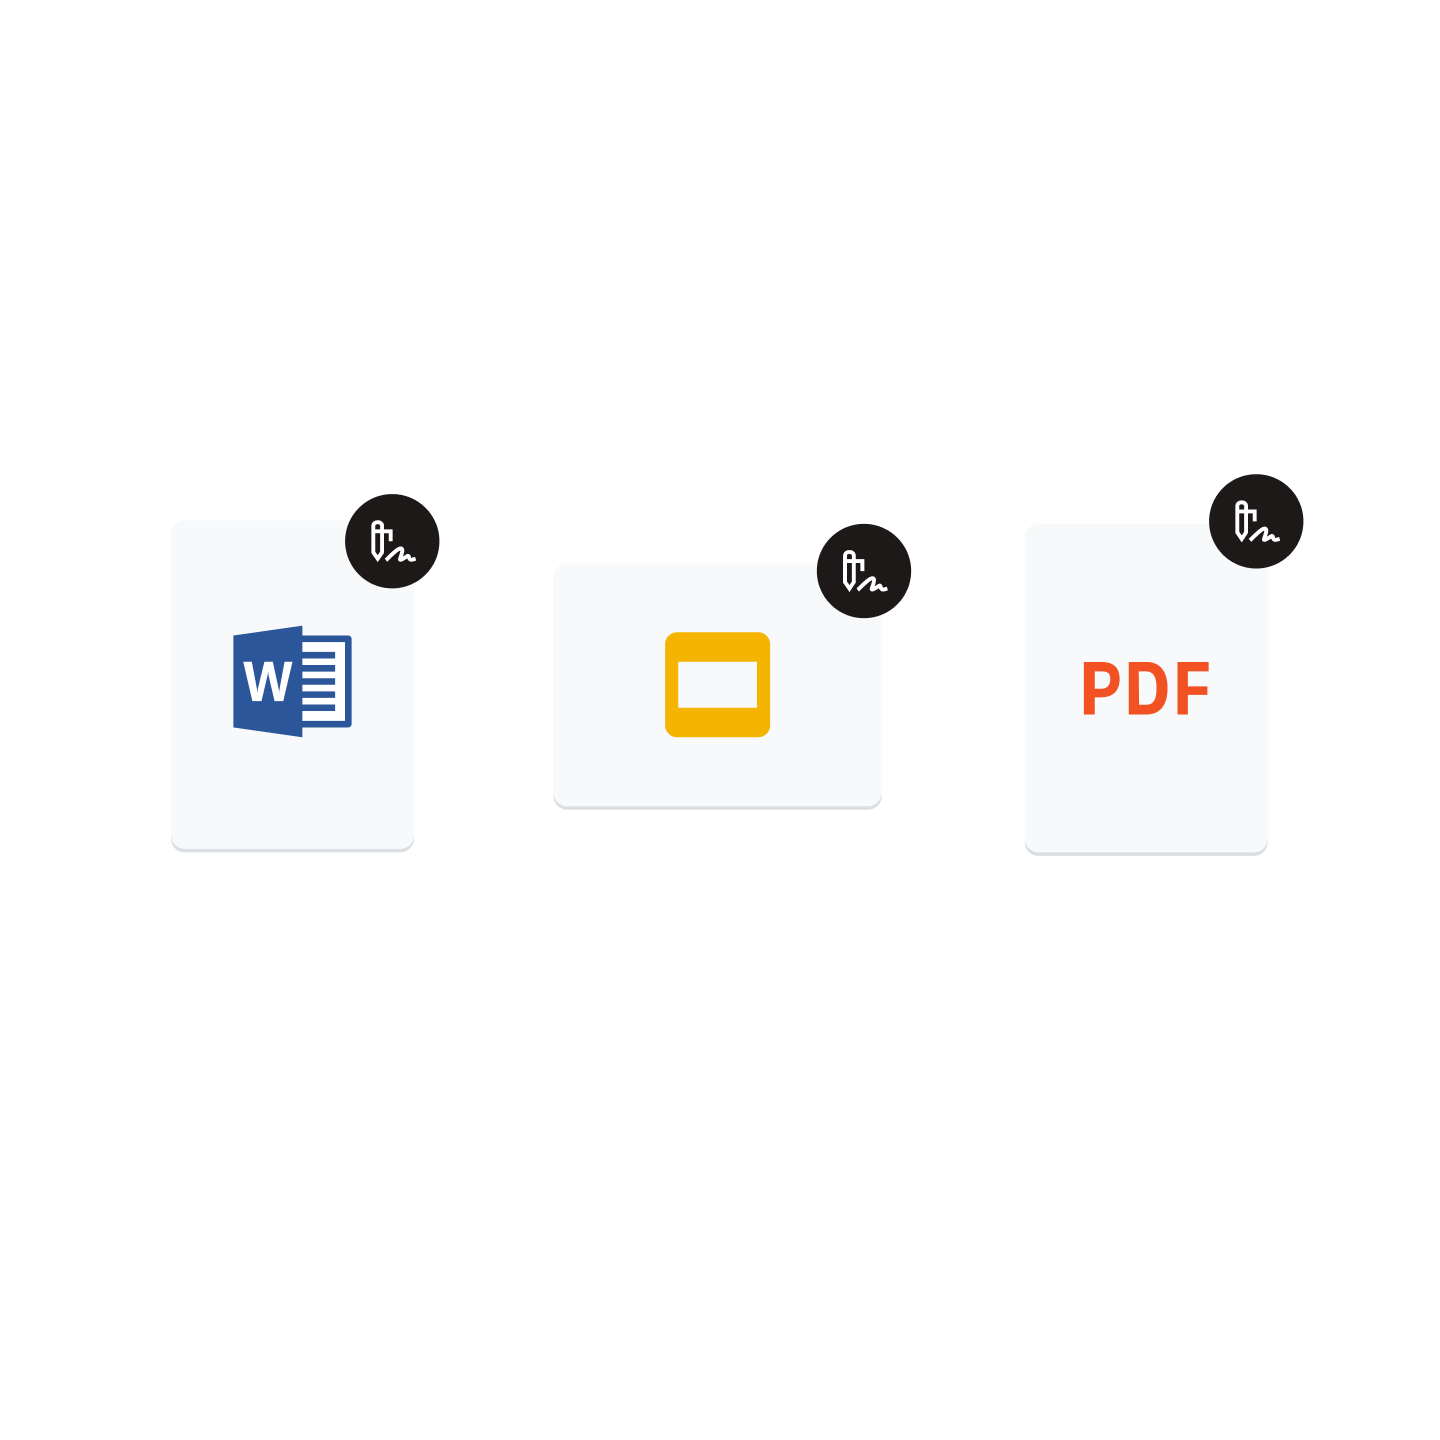 Microsoft Word 图标、Google 幻灯片图标和 PDF 图标